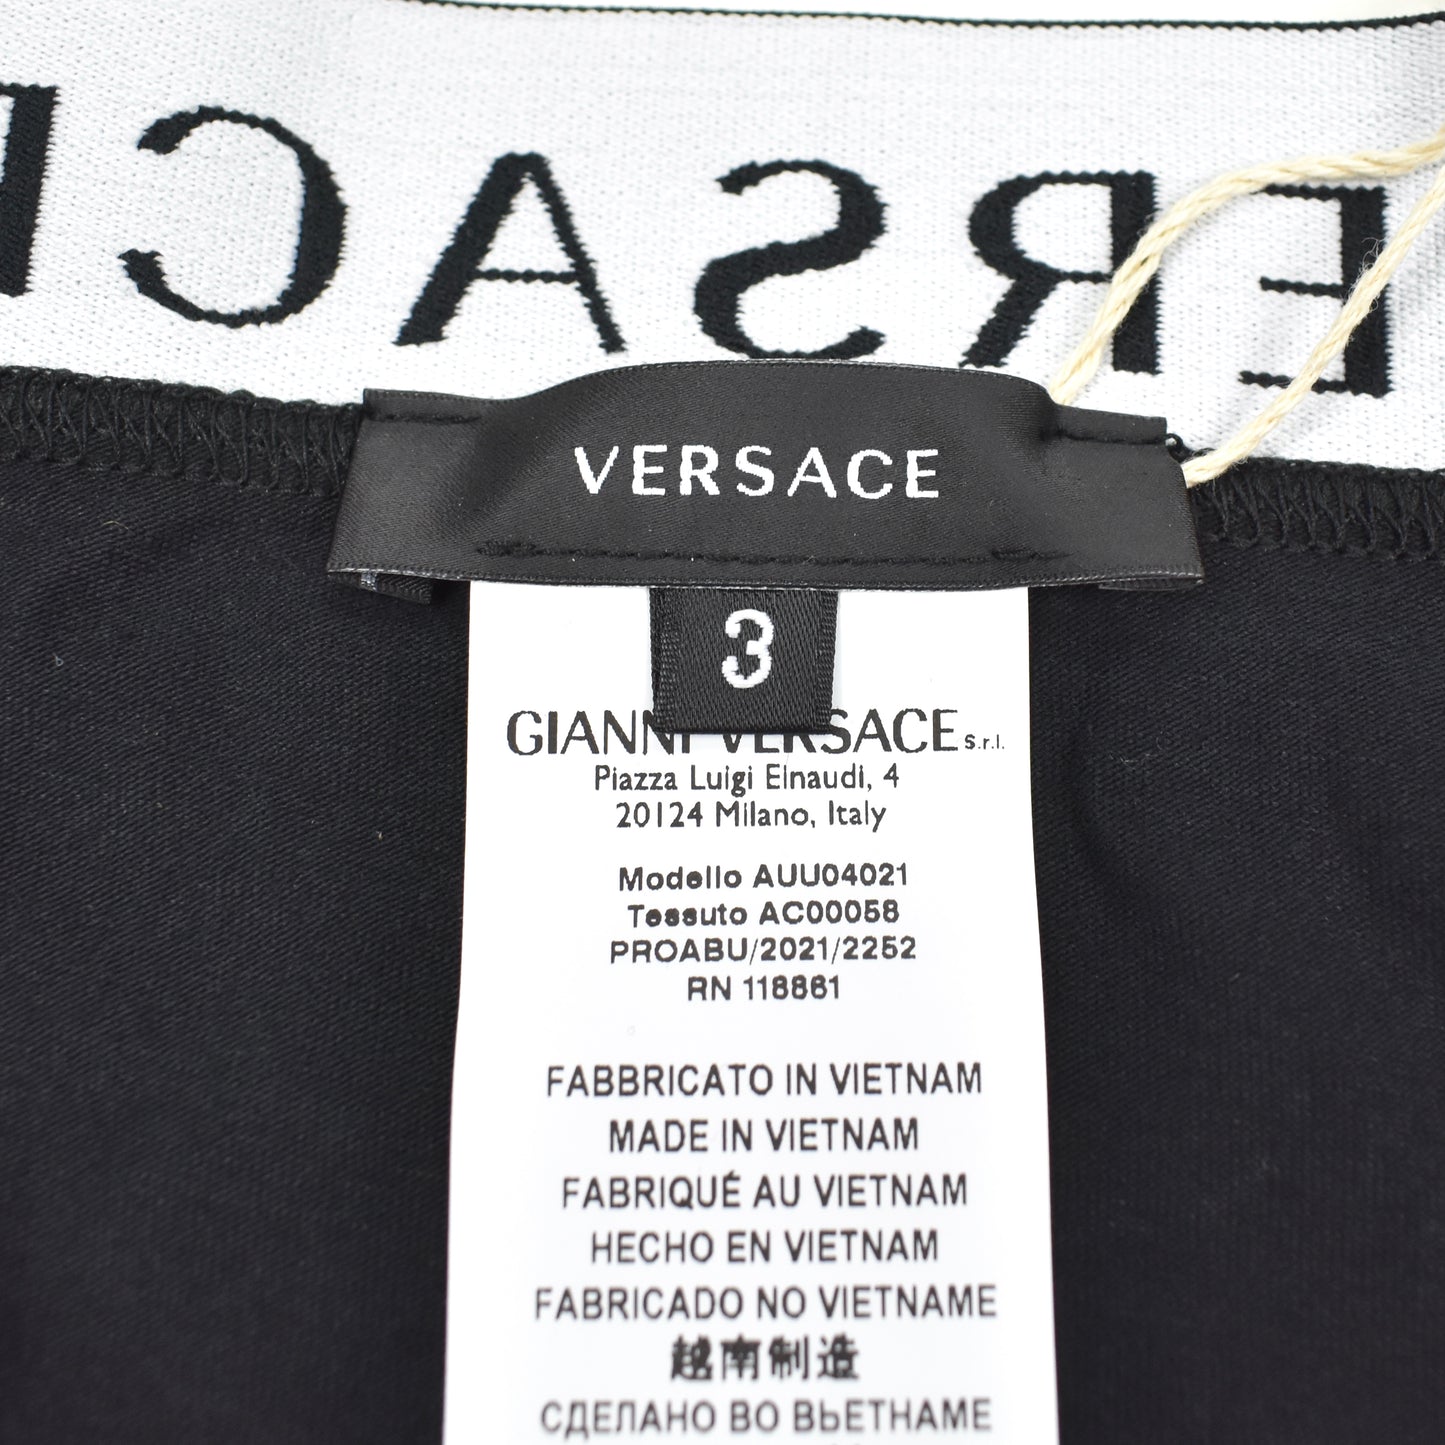 Versace - Black Logo Boxer Briefs (2-Pack)